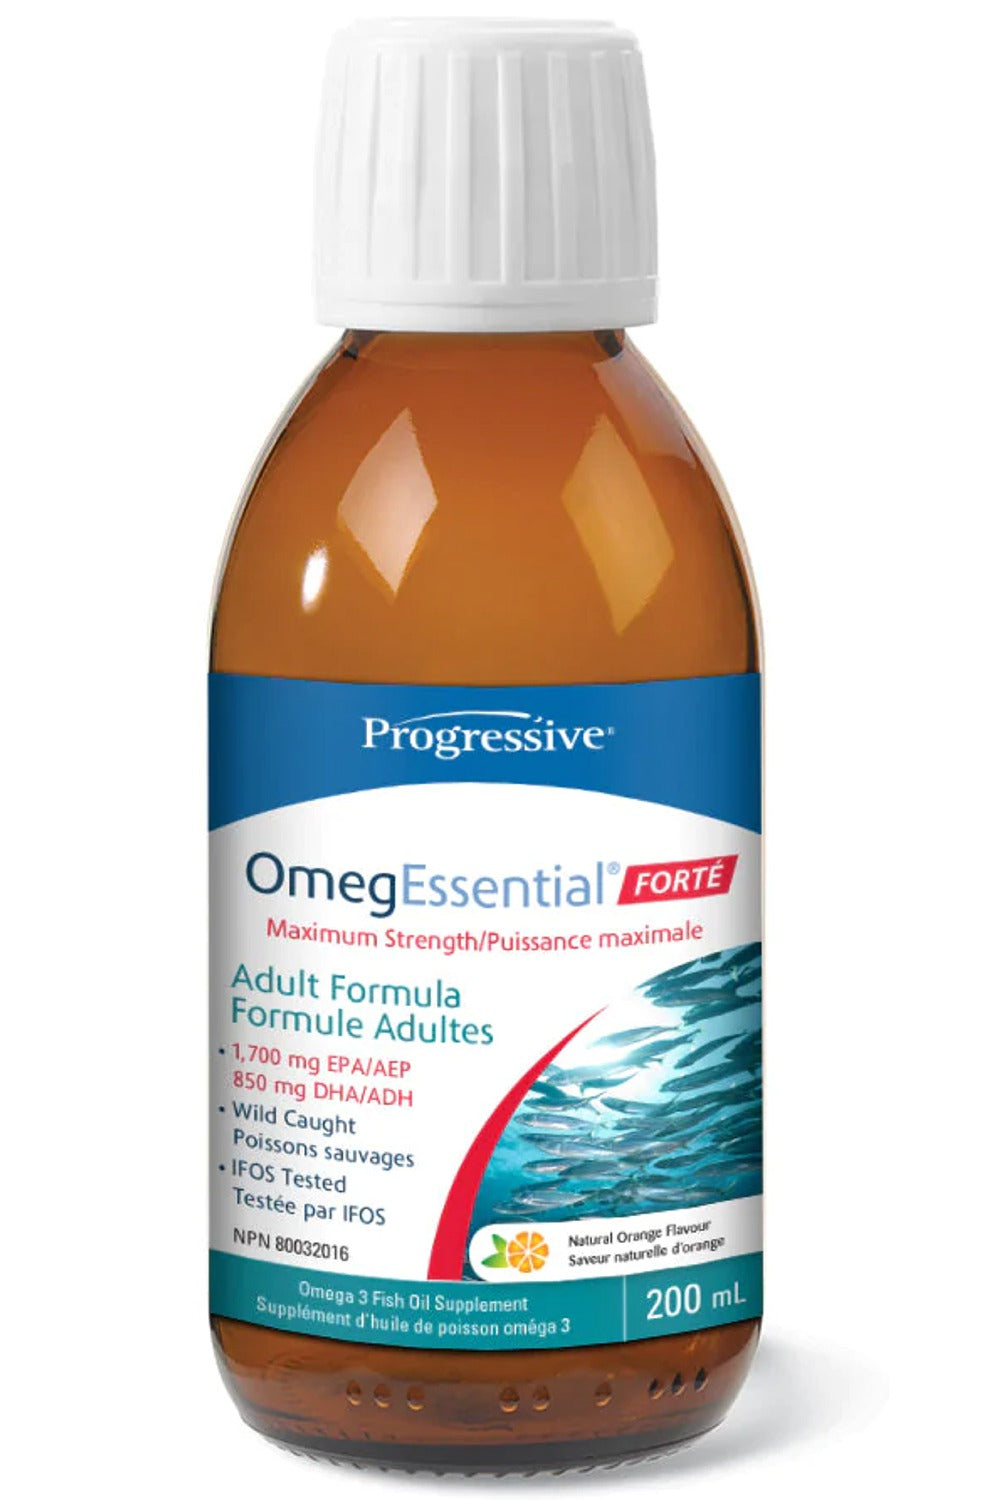 PROGRESSIVE OmegEssential Forte (Orange - 200 ml)